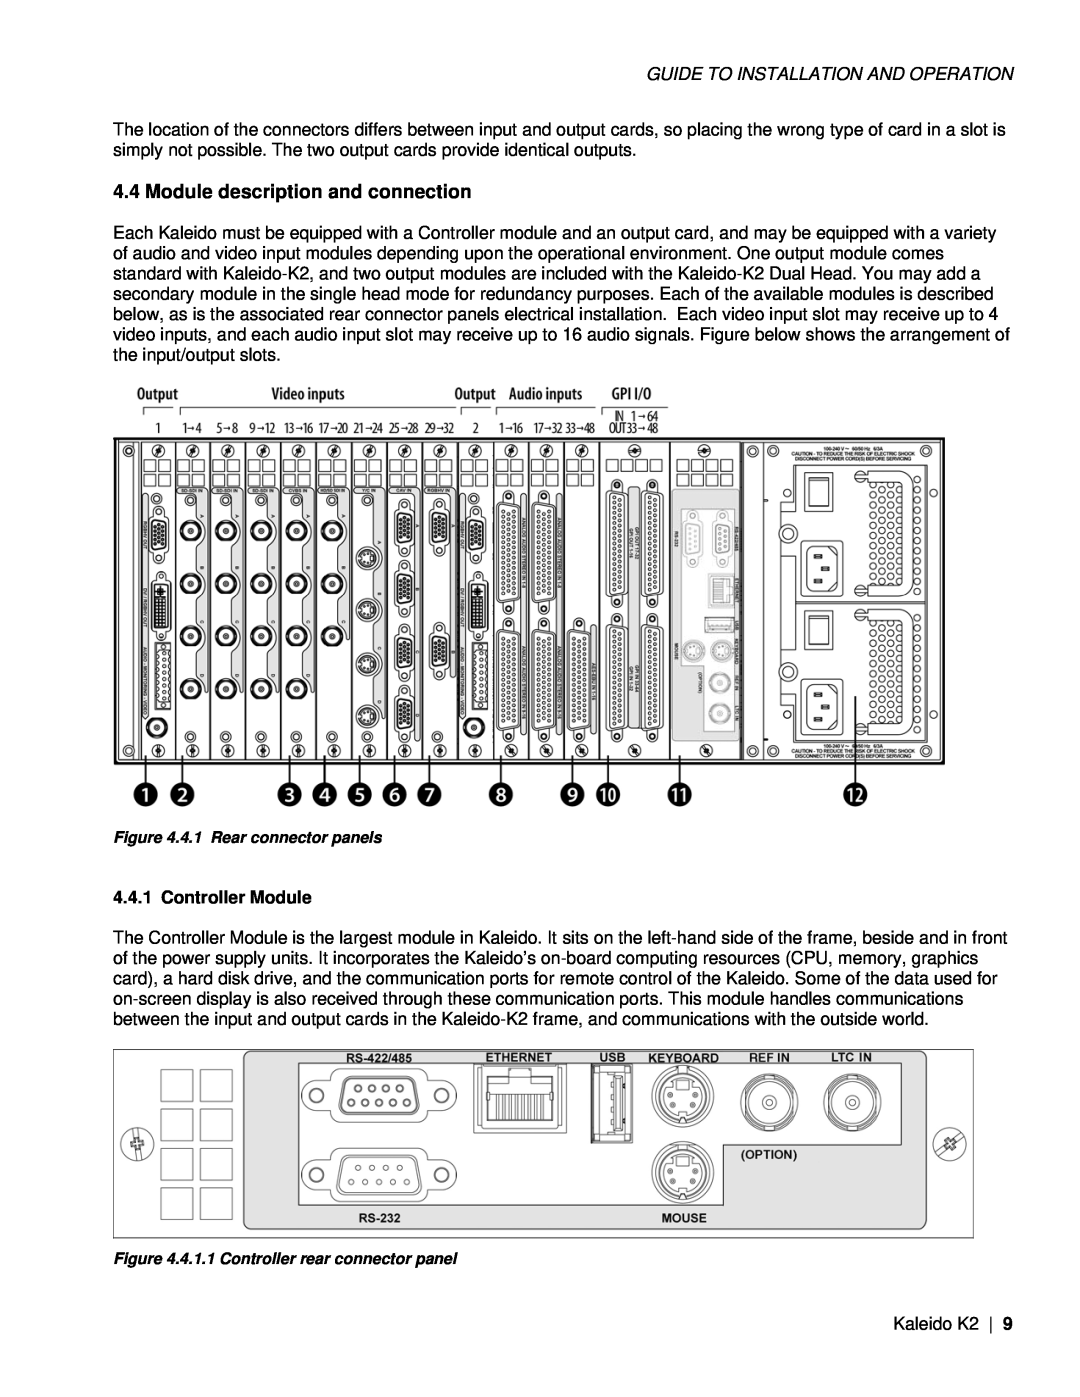 Miranda Camera Co KALEIDO-K2, M406-9900-402 specifications Module description and connection, Controller Module 